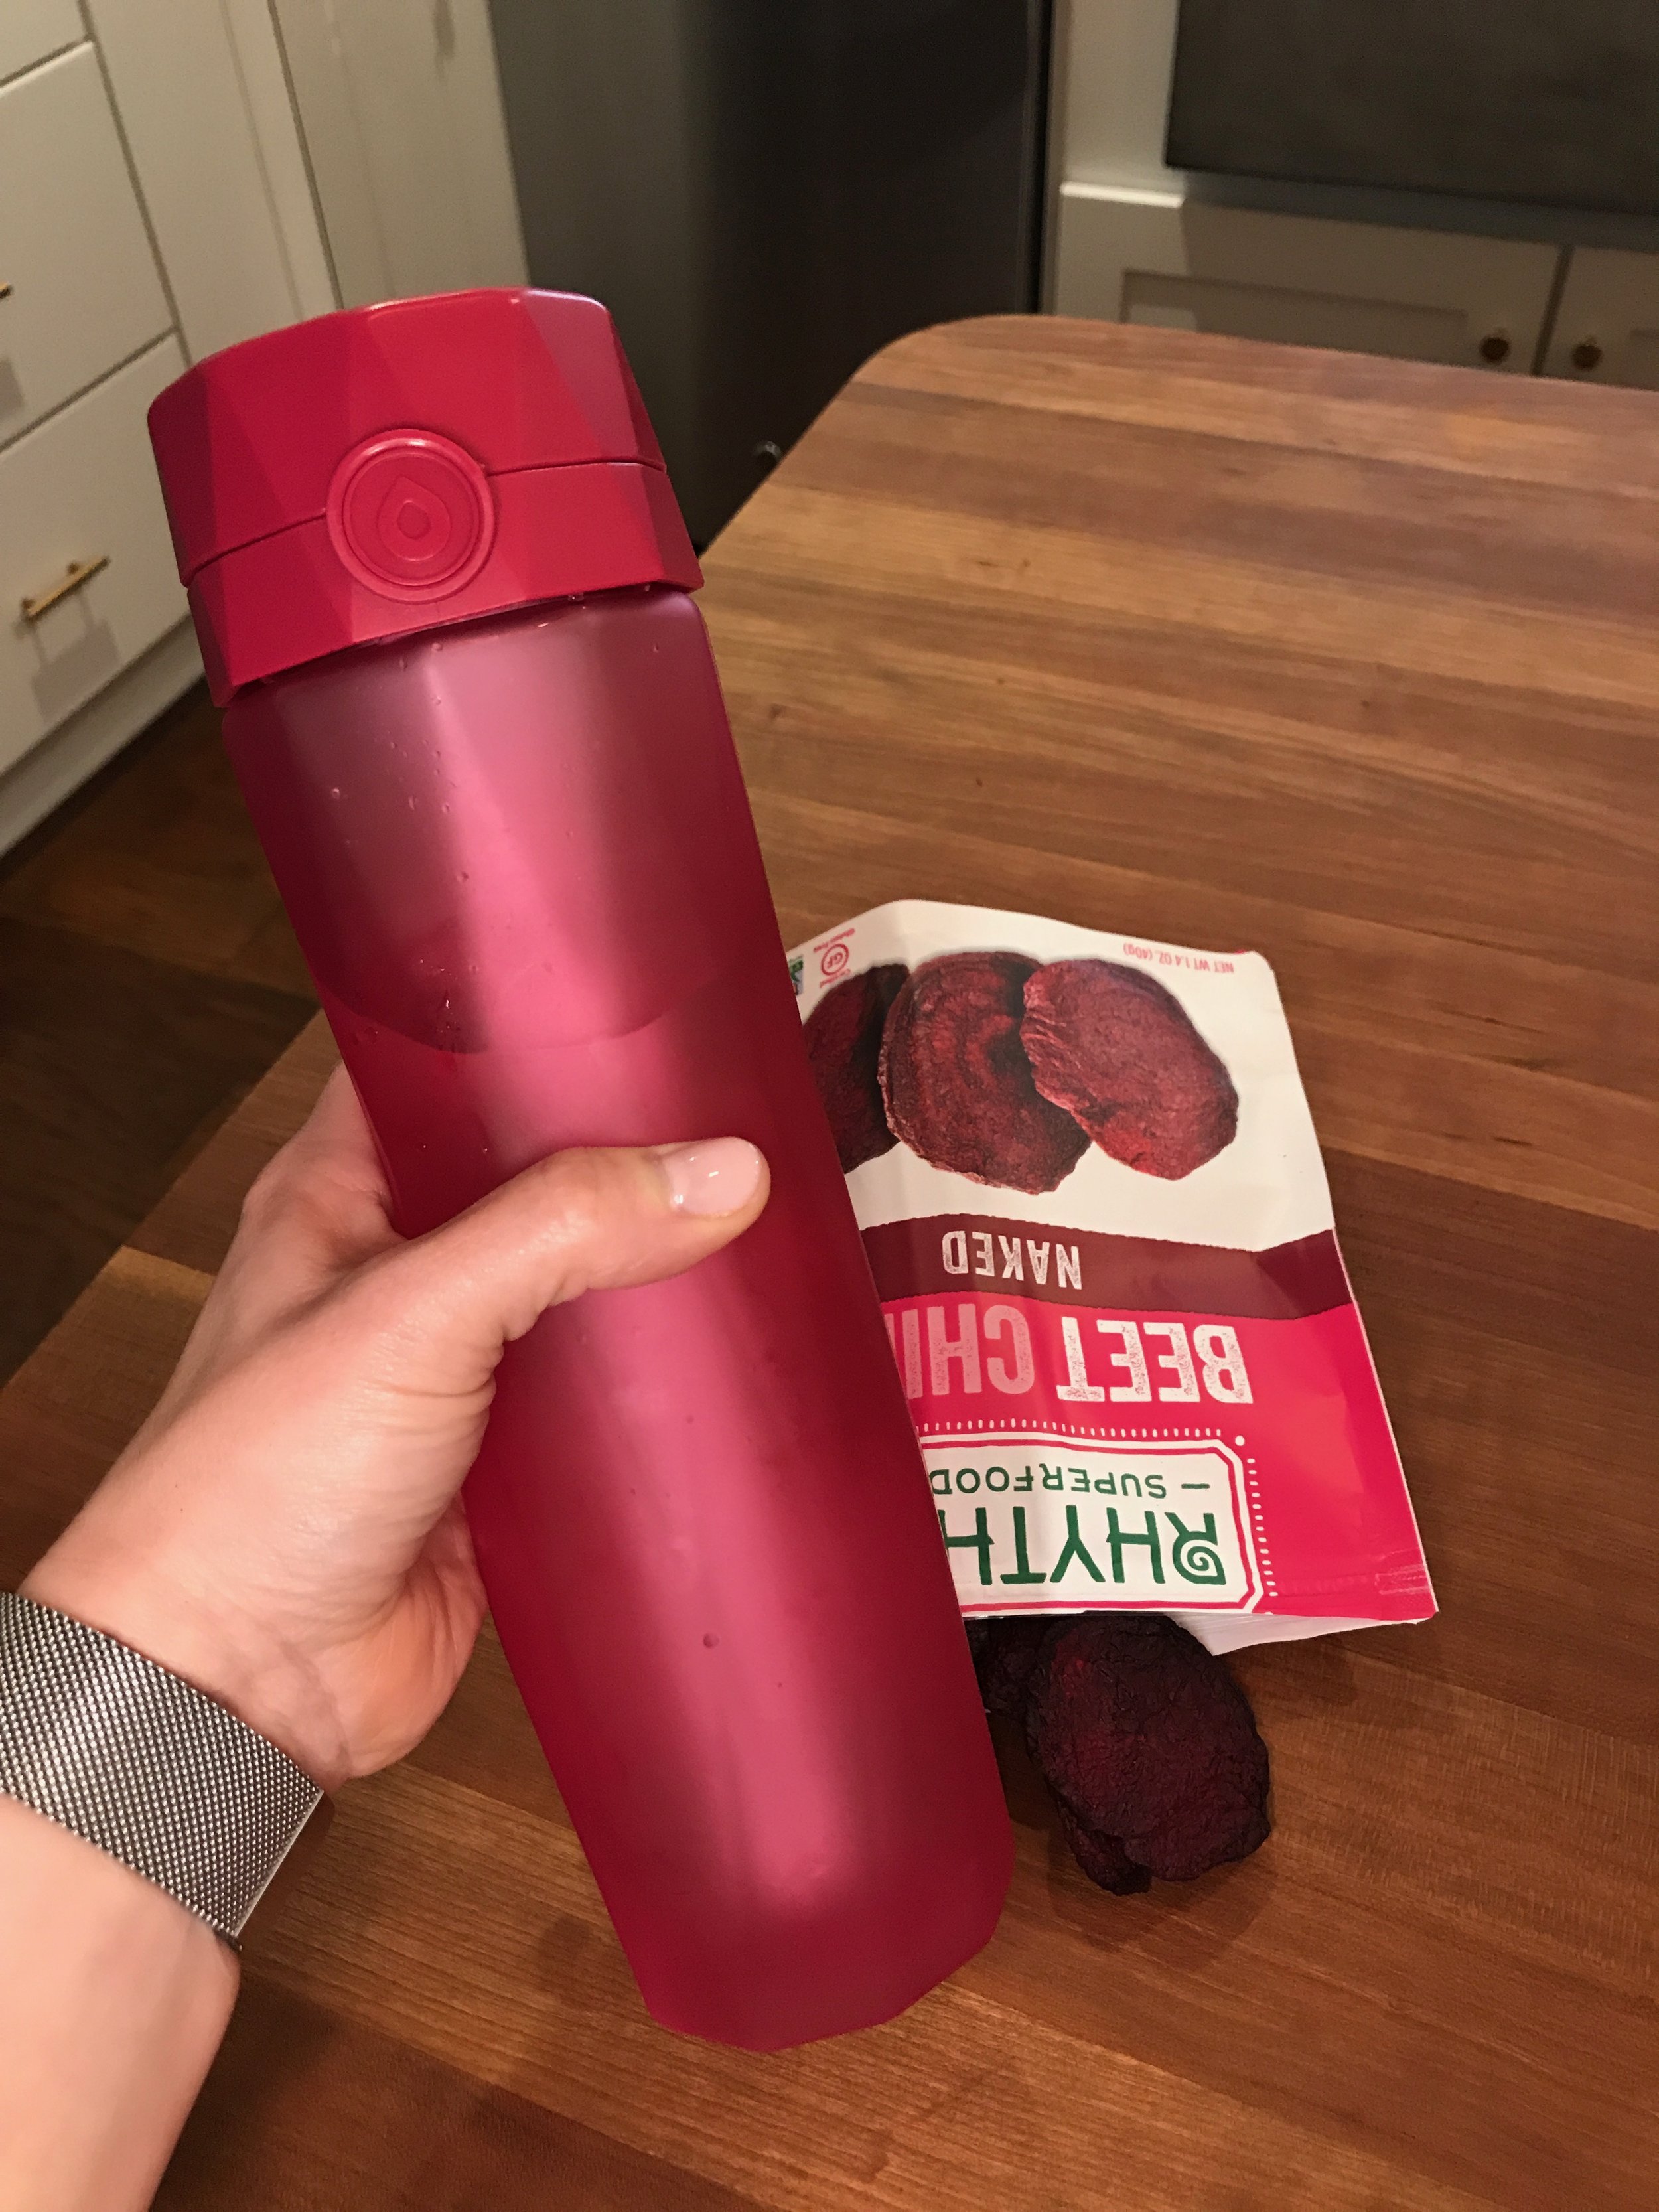 hidrate spark water bottle in pink